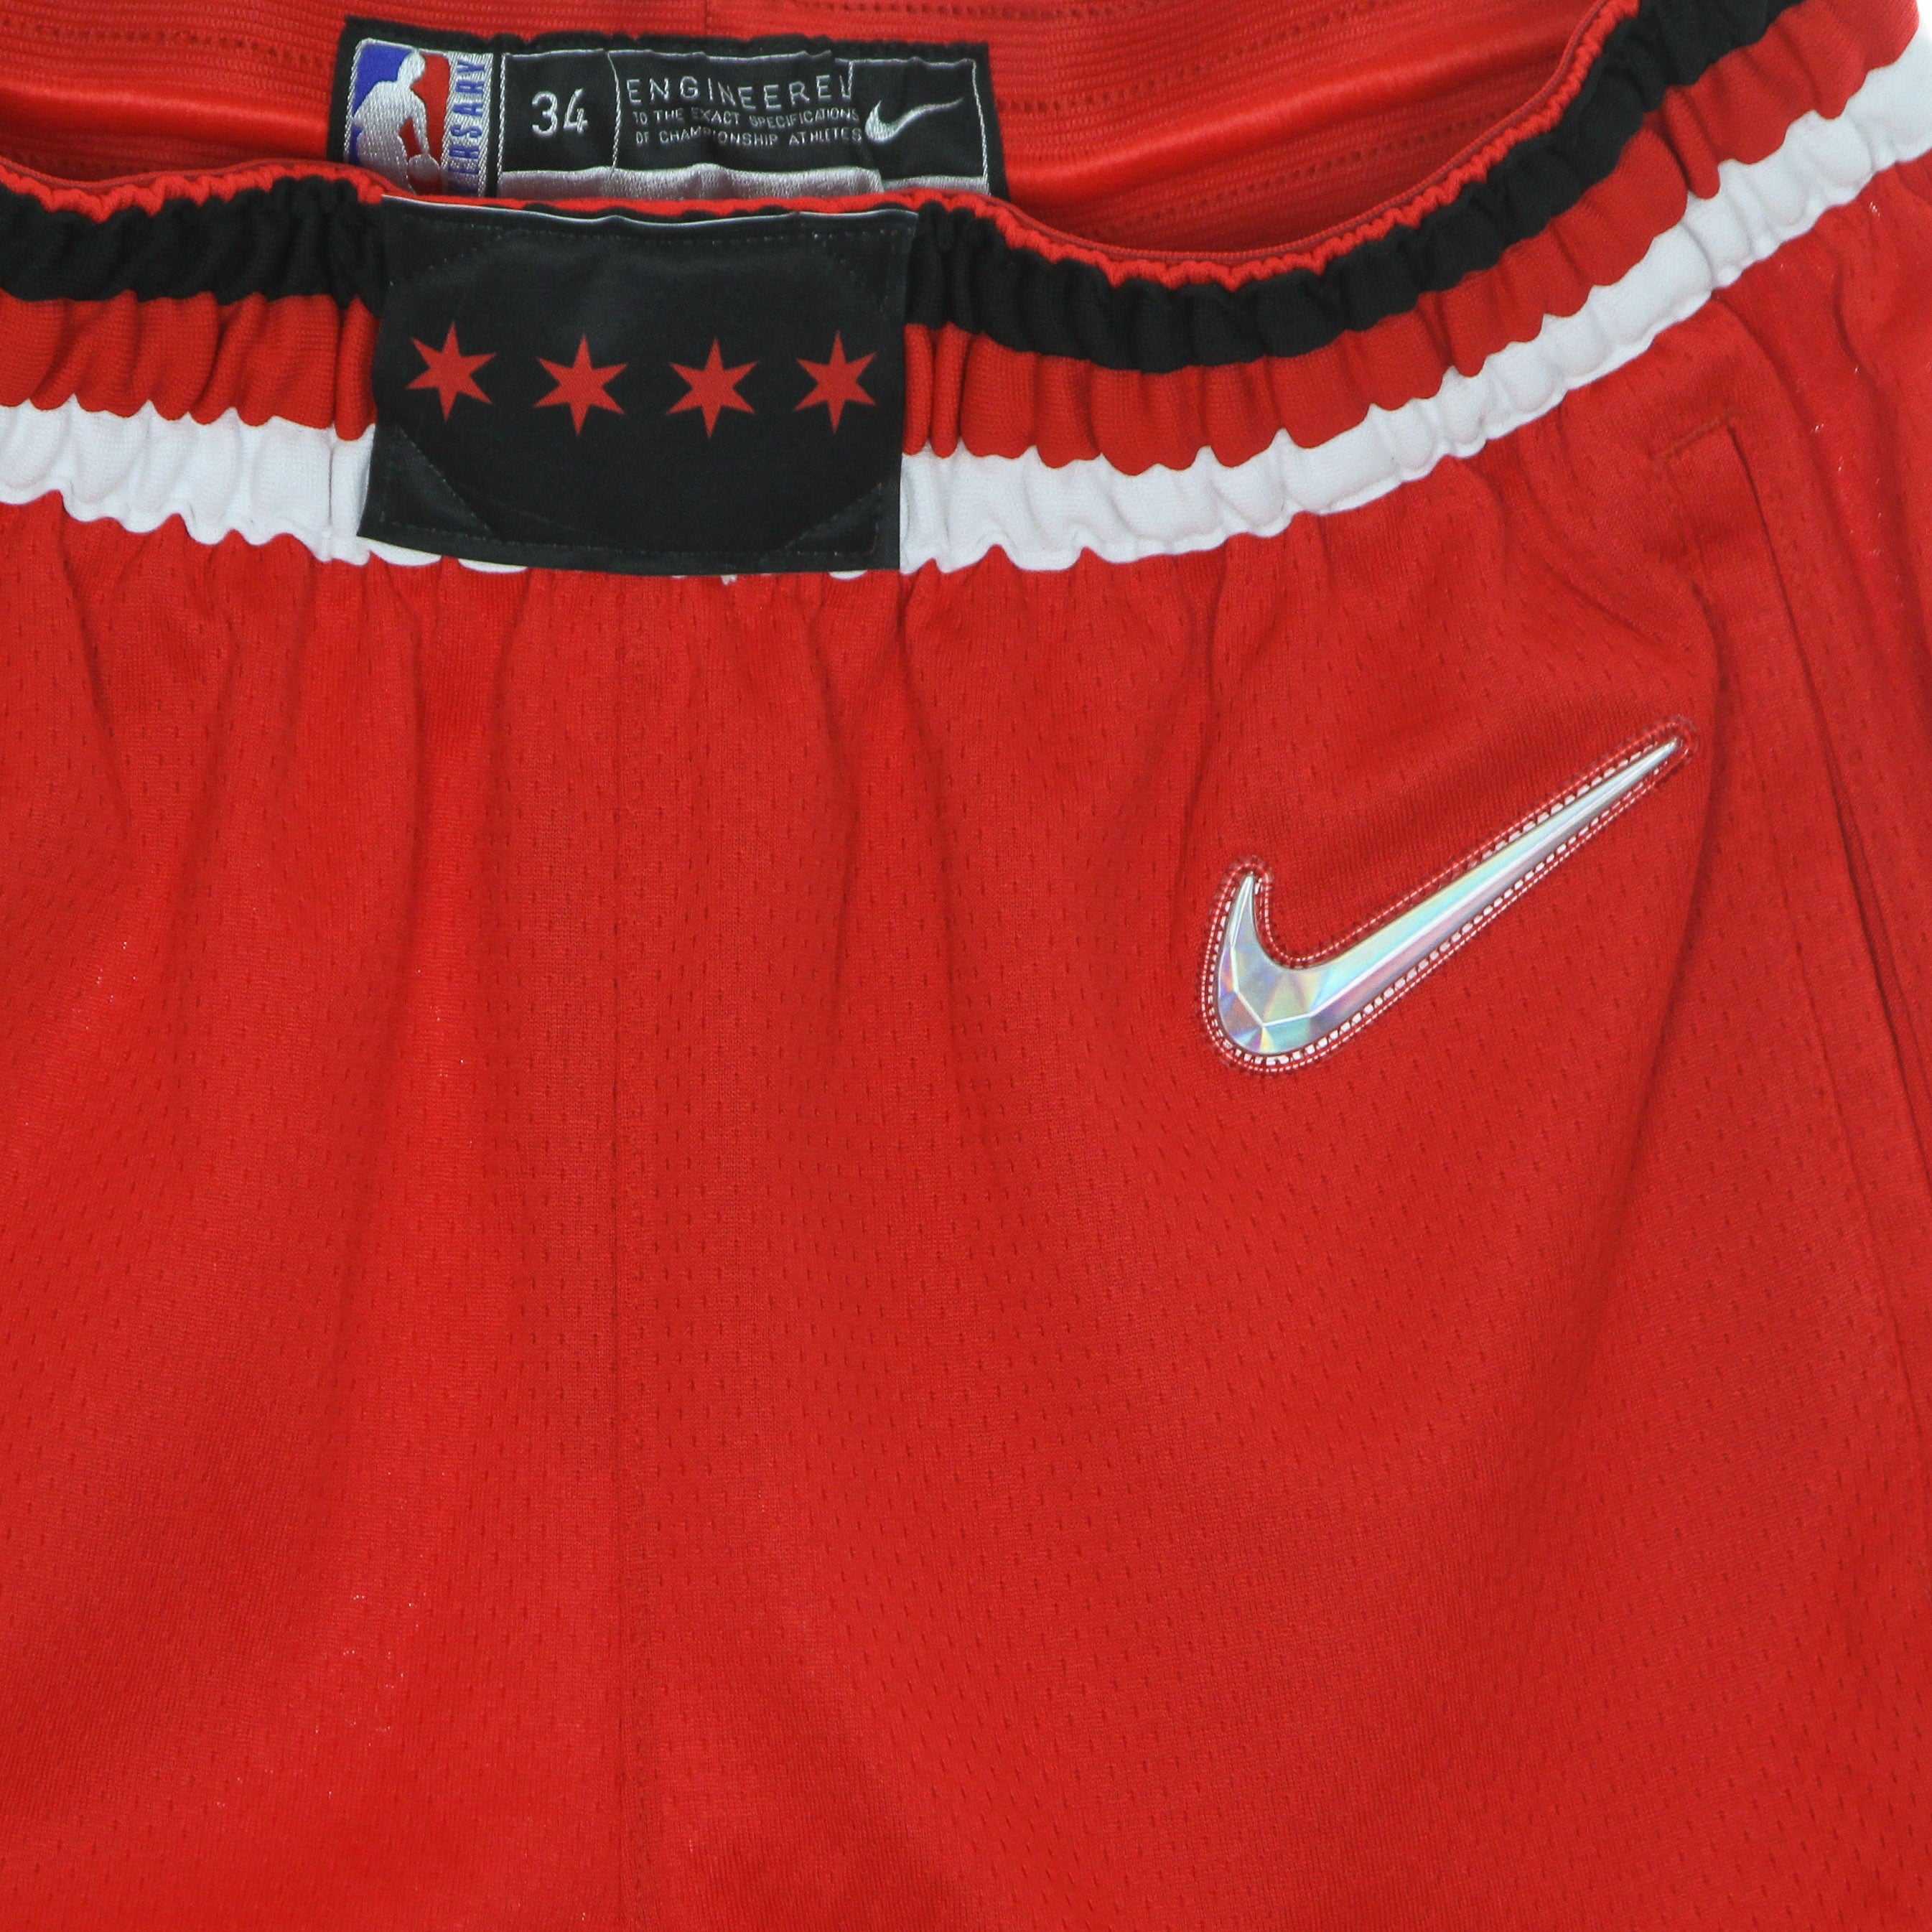 Nike Nba, Pantaloncino Basket Uomo Nba Dri-fit Swingman Shorts Mmt 21 Chibul, University Red/black/white